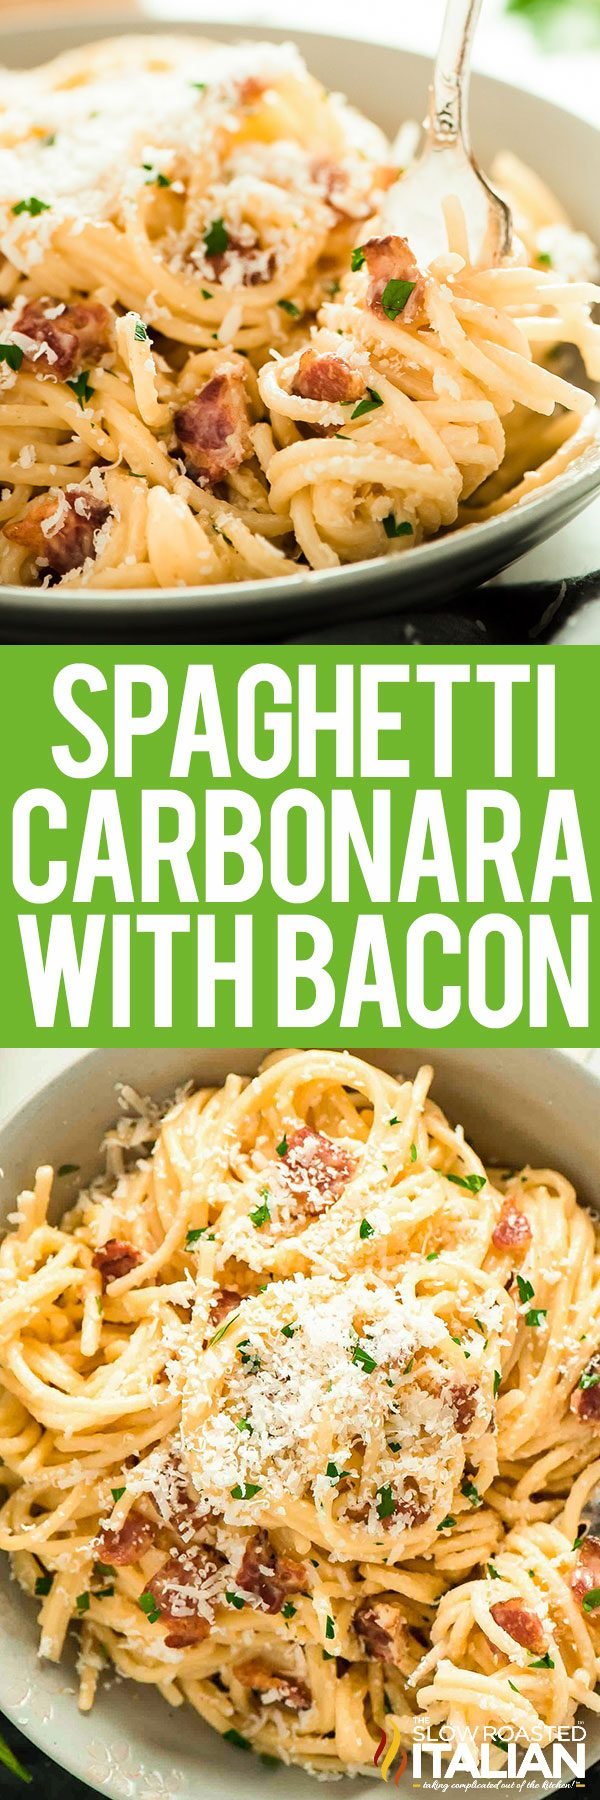 carbonara with bacon over pasta.